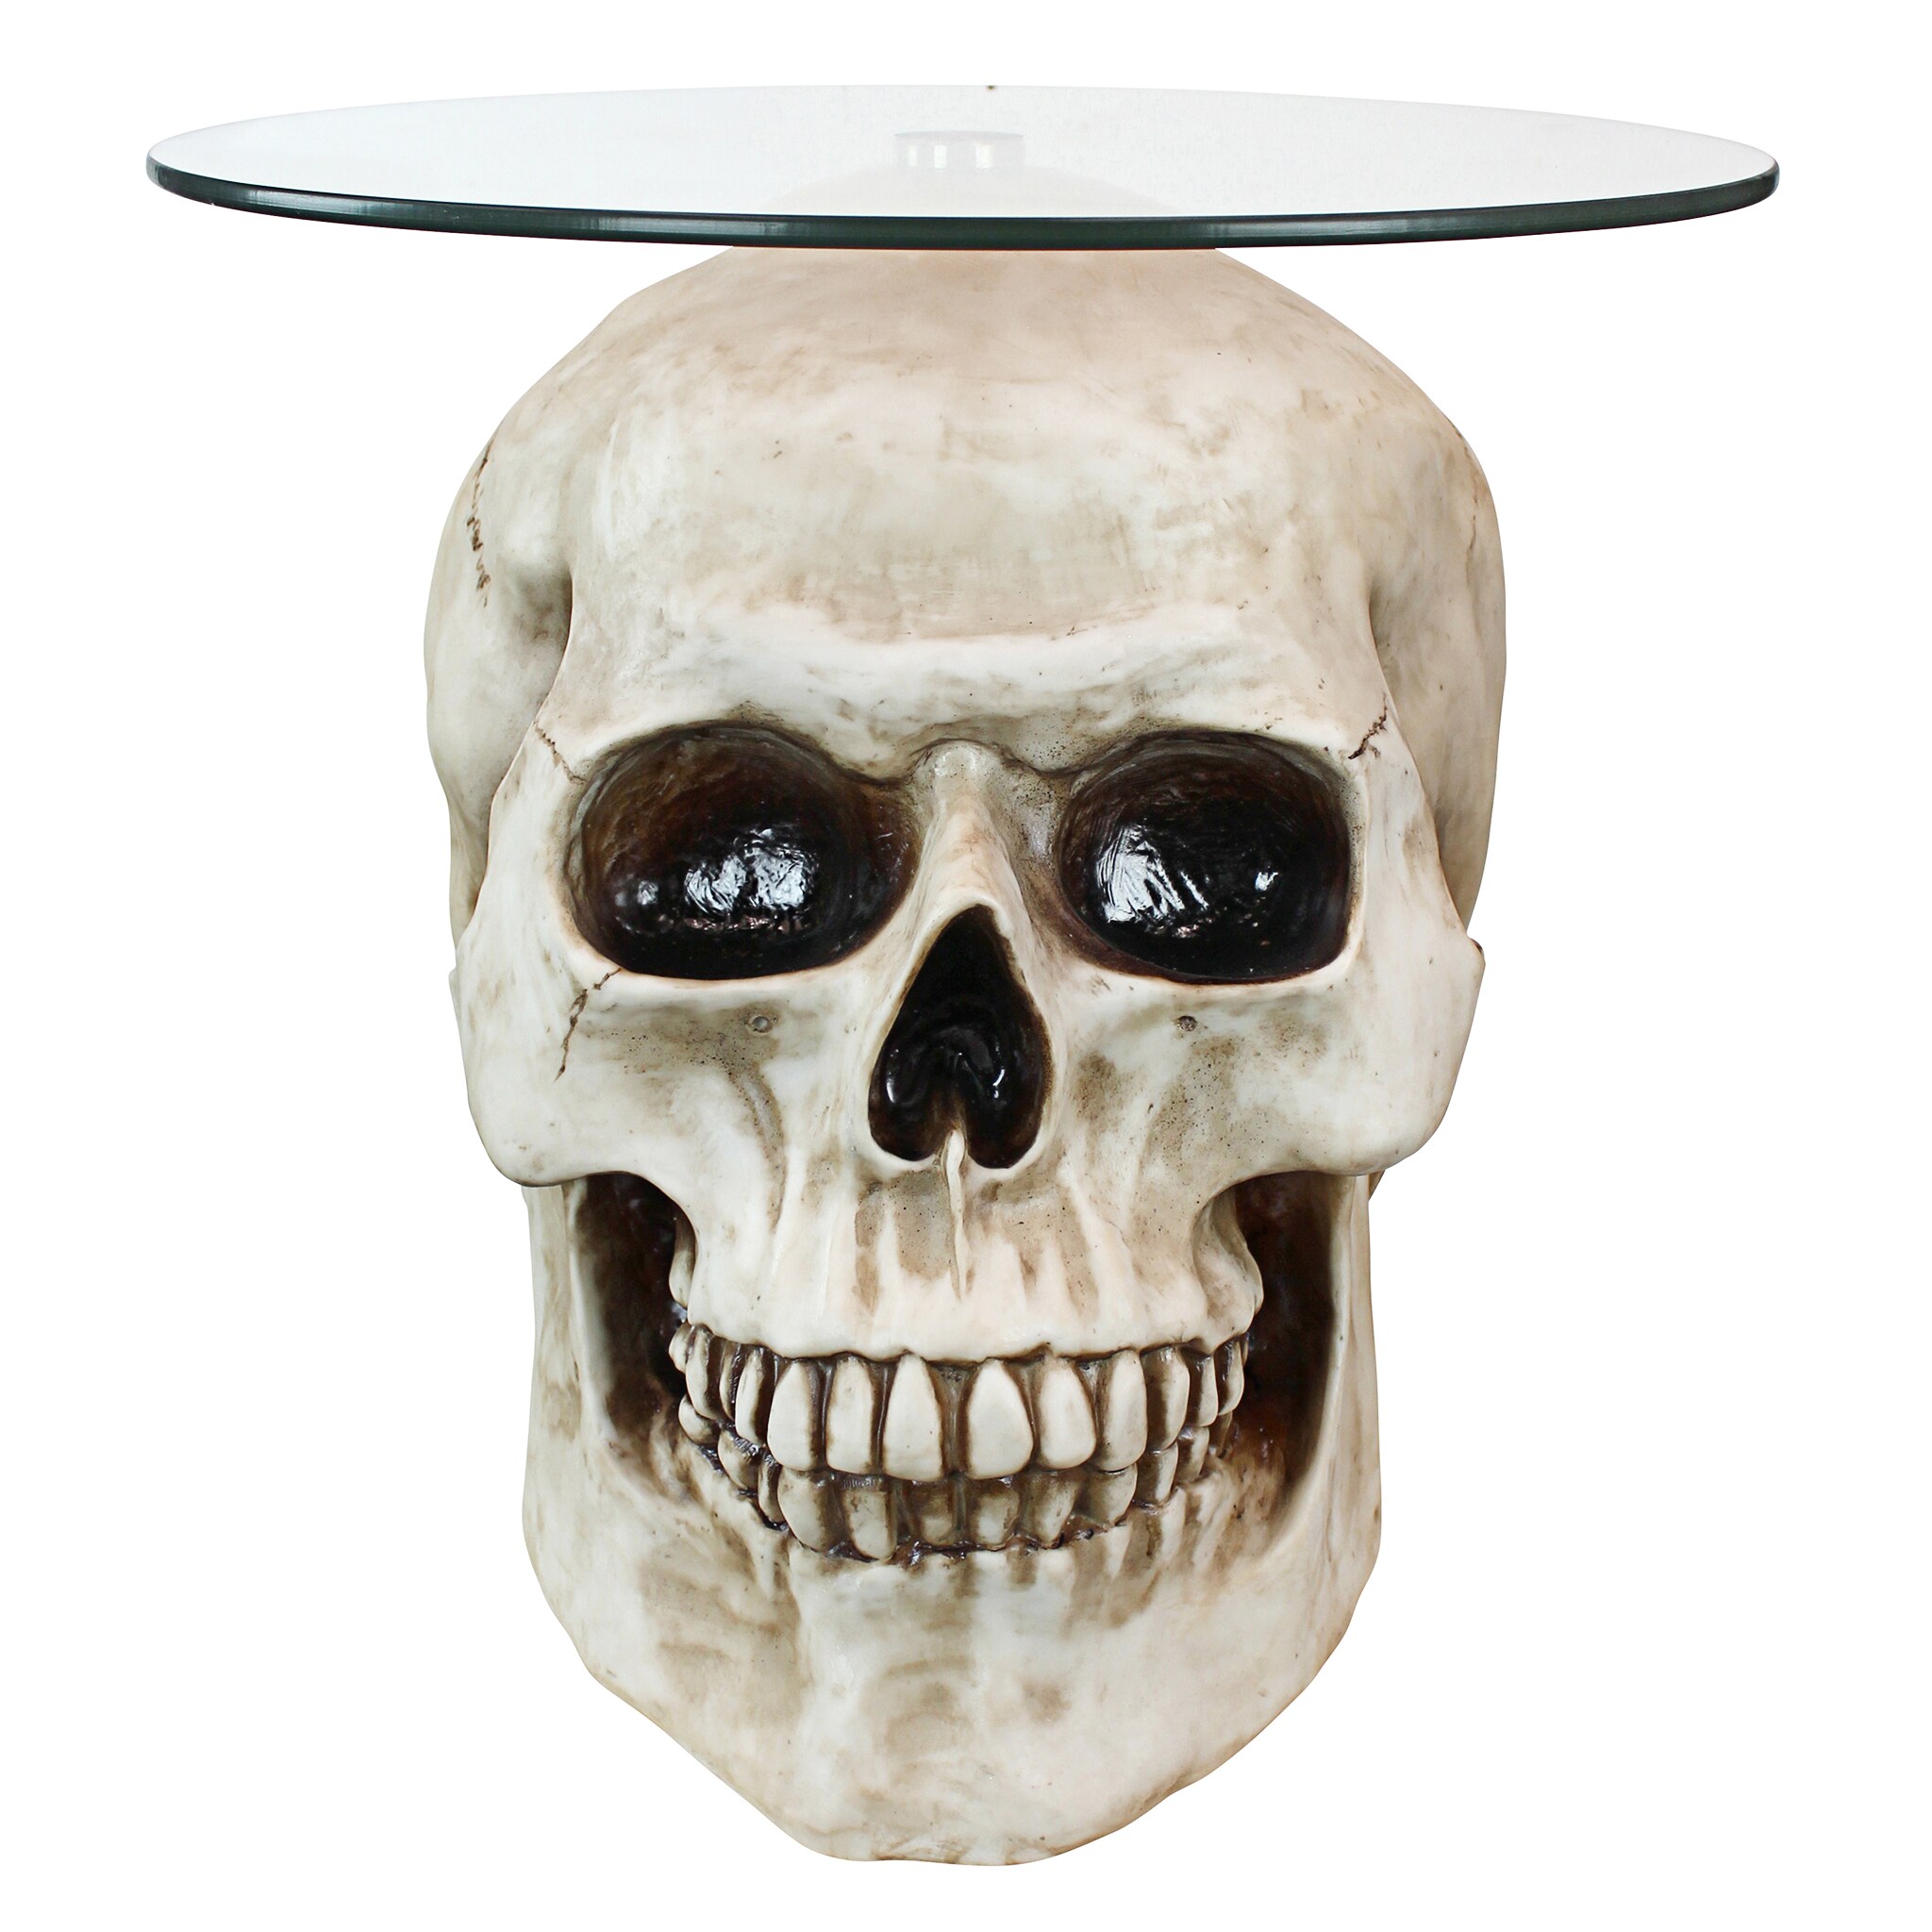 Skull & Bones Shot Glass Set of 4 Designs Cast Resin With Metal Lining 2" Gift 